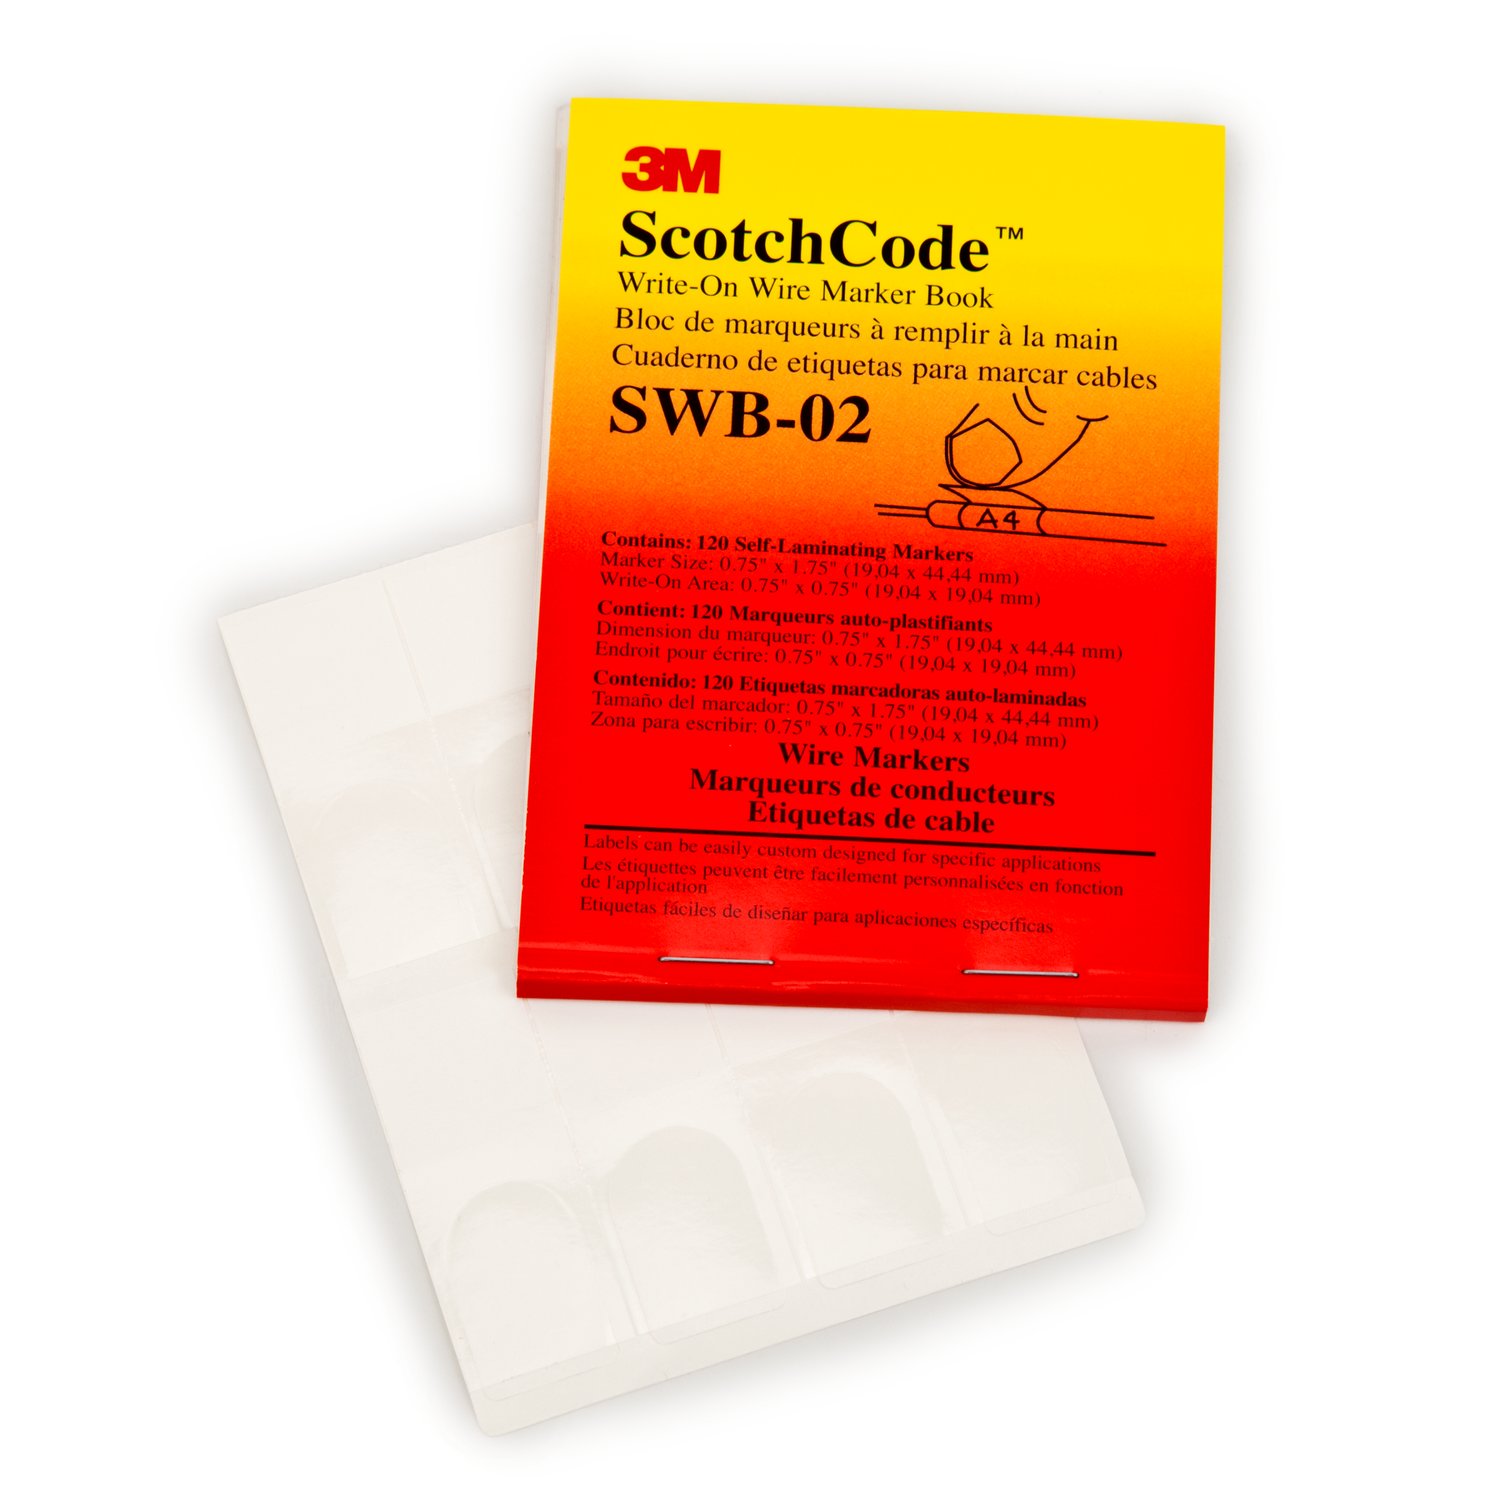 7000058801 - 3M ScotchCode Write-On Wire Marker Book SWB-02, 0.75 in x 1.75 in,
5/Case